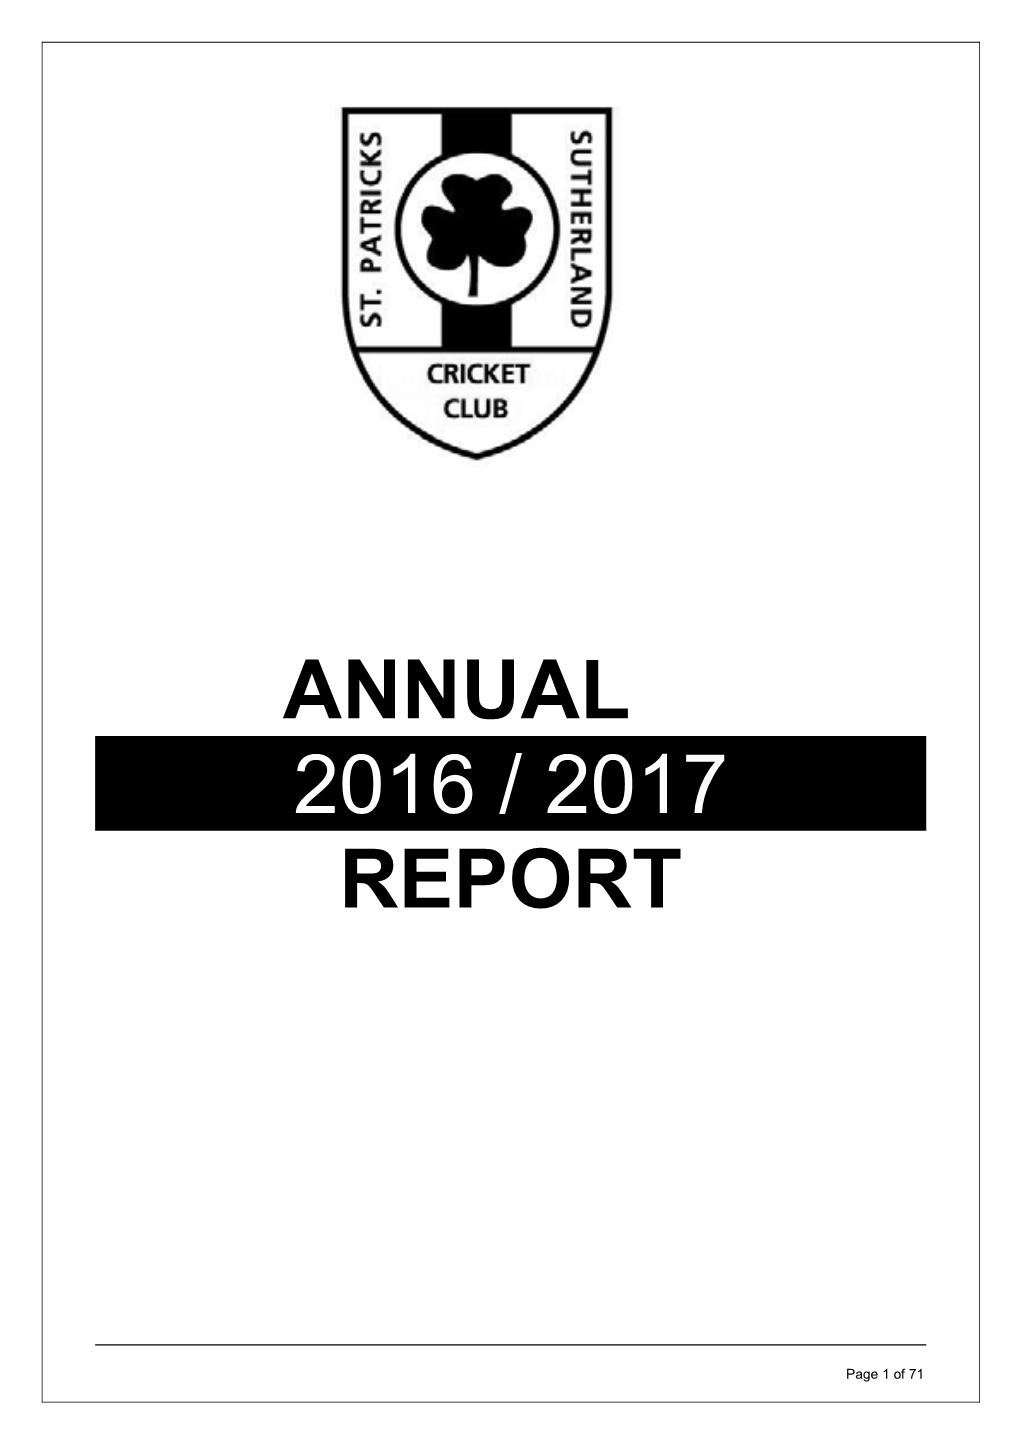 Annual 2016 / 2017 Report